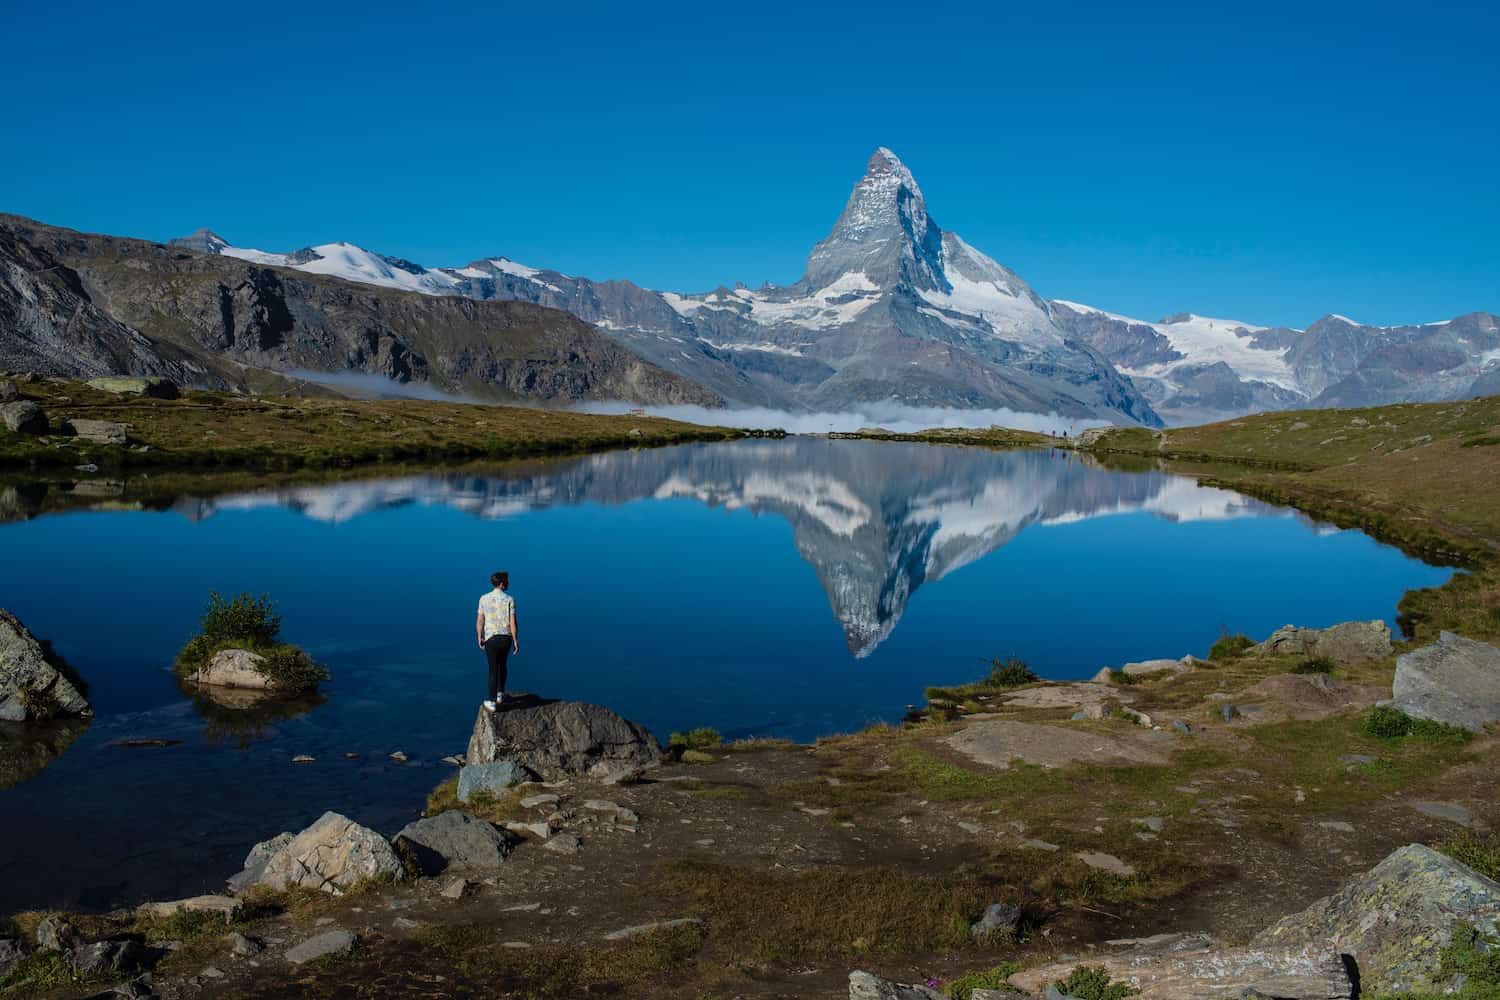 A Guide for the Best Views of the Matterhorn